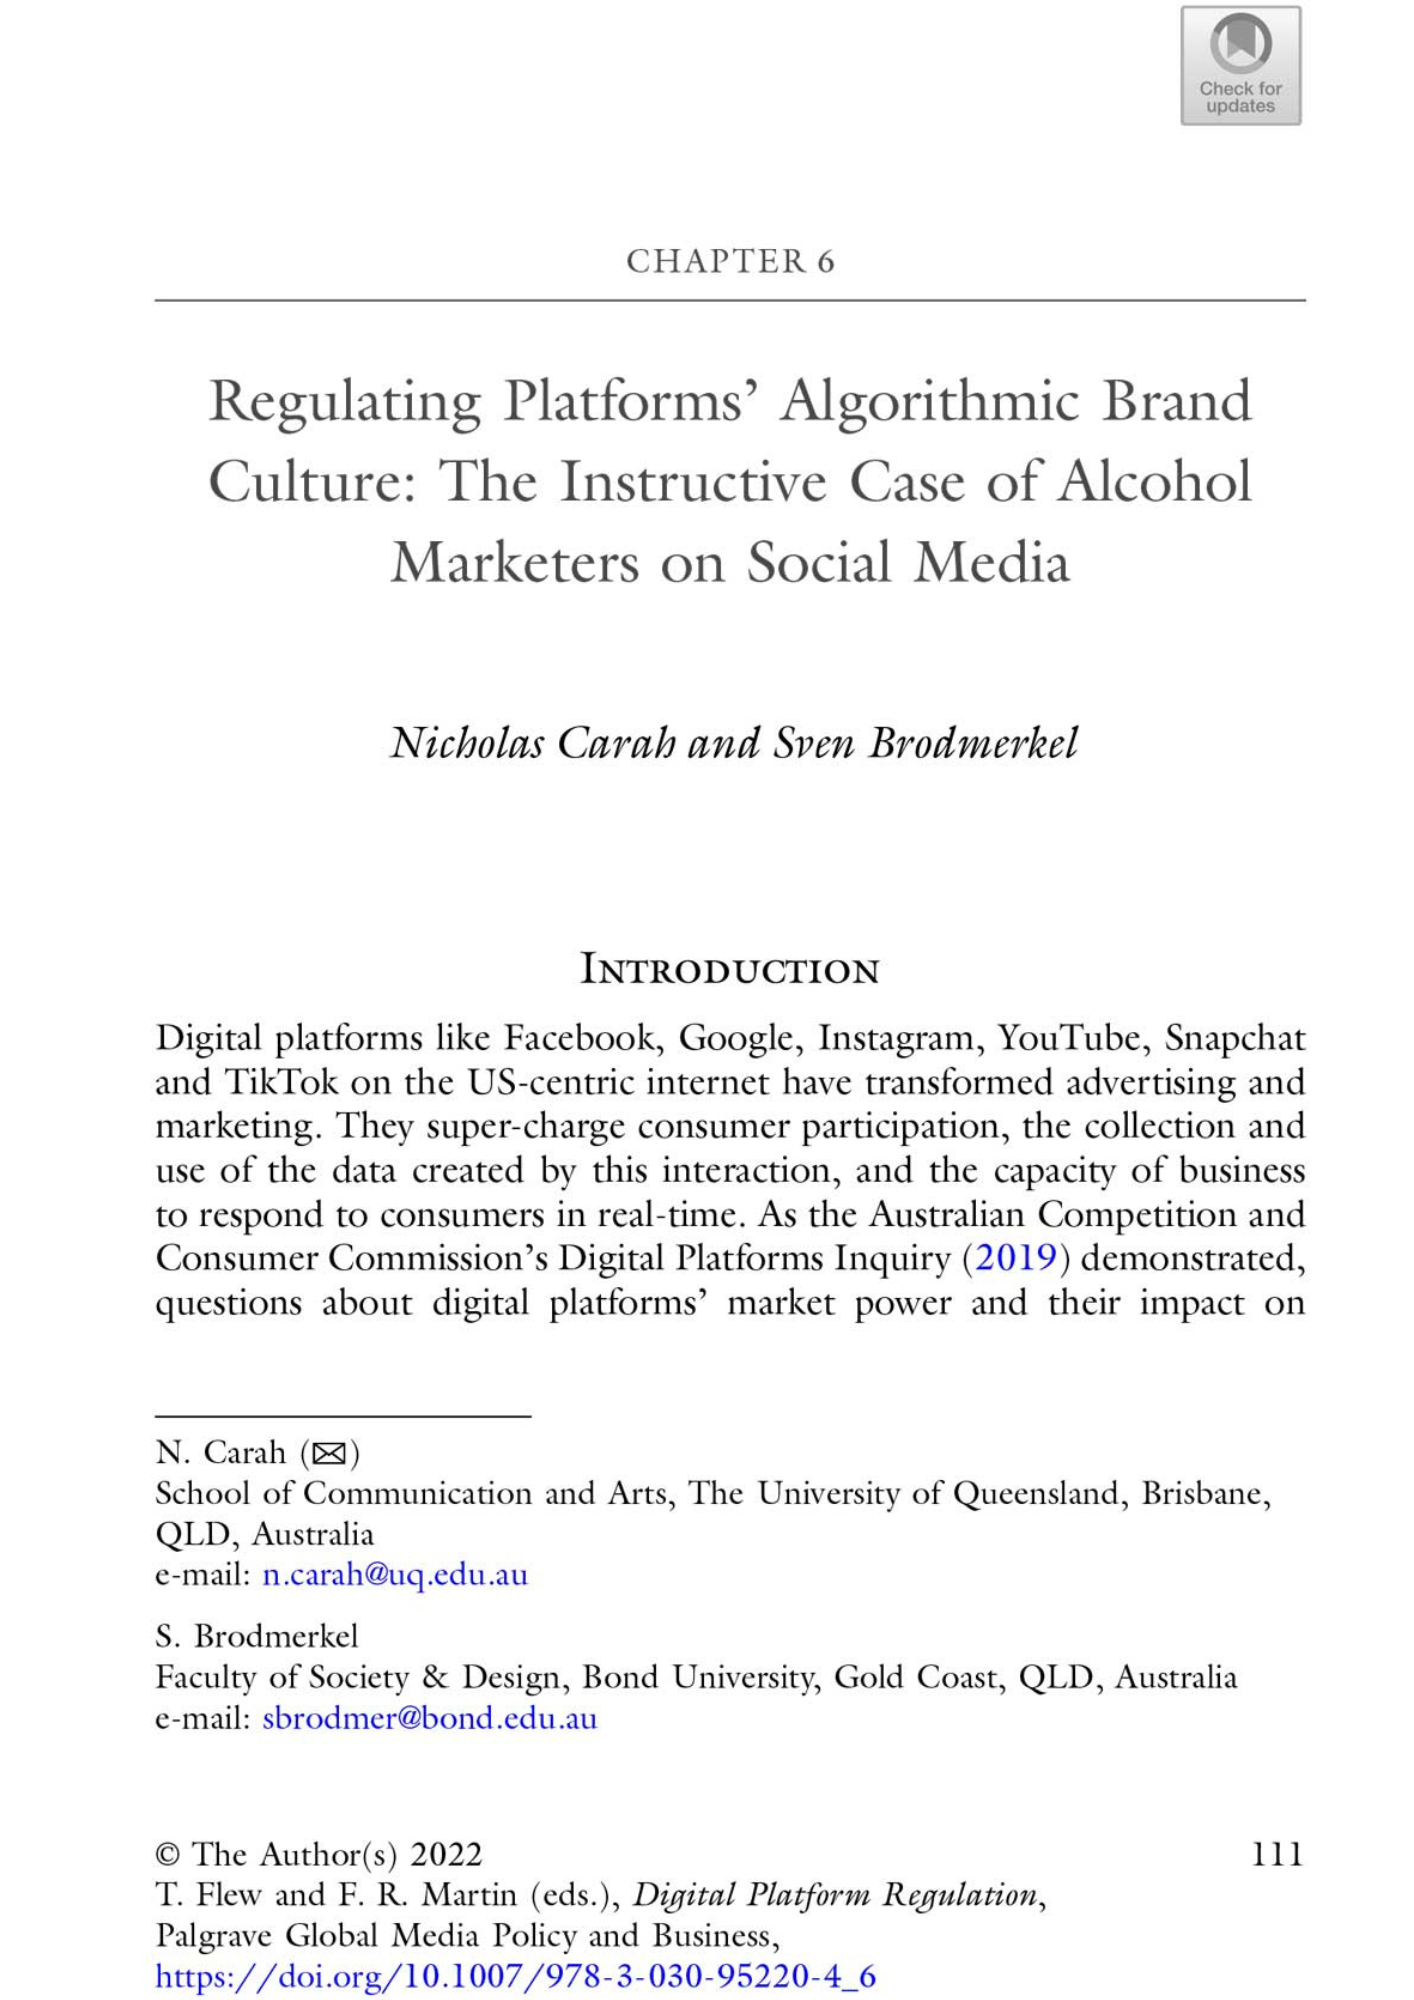 Regulating Platforms’ Algorithmic Brand Culture: The Instructive Case of Alcohol Marketers on Social Media